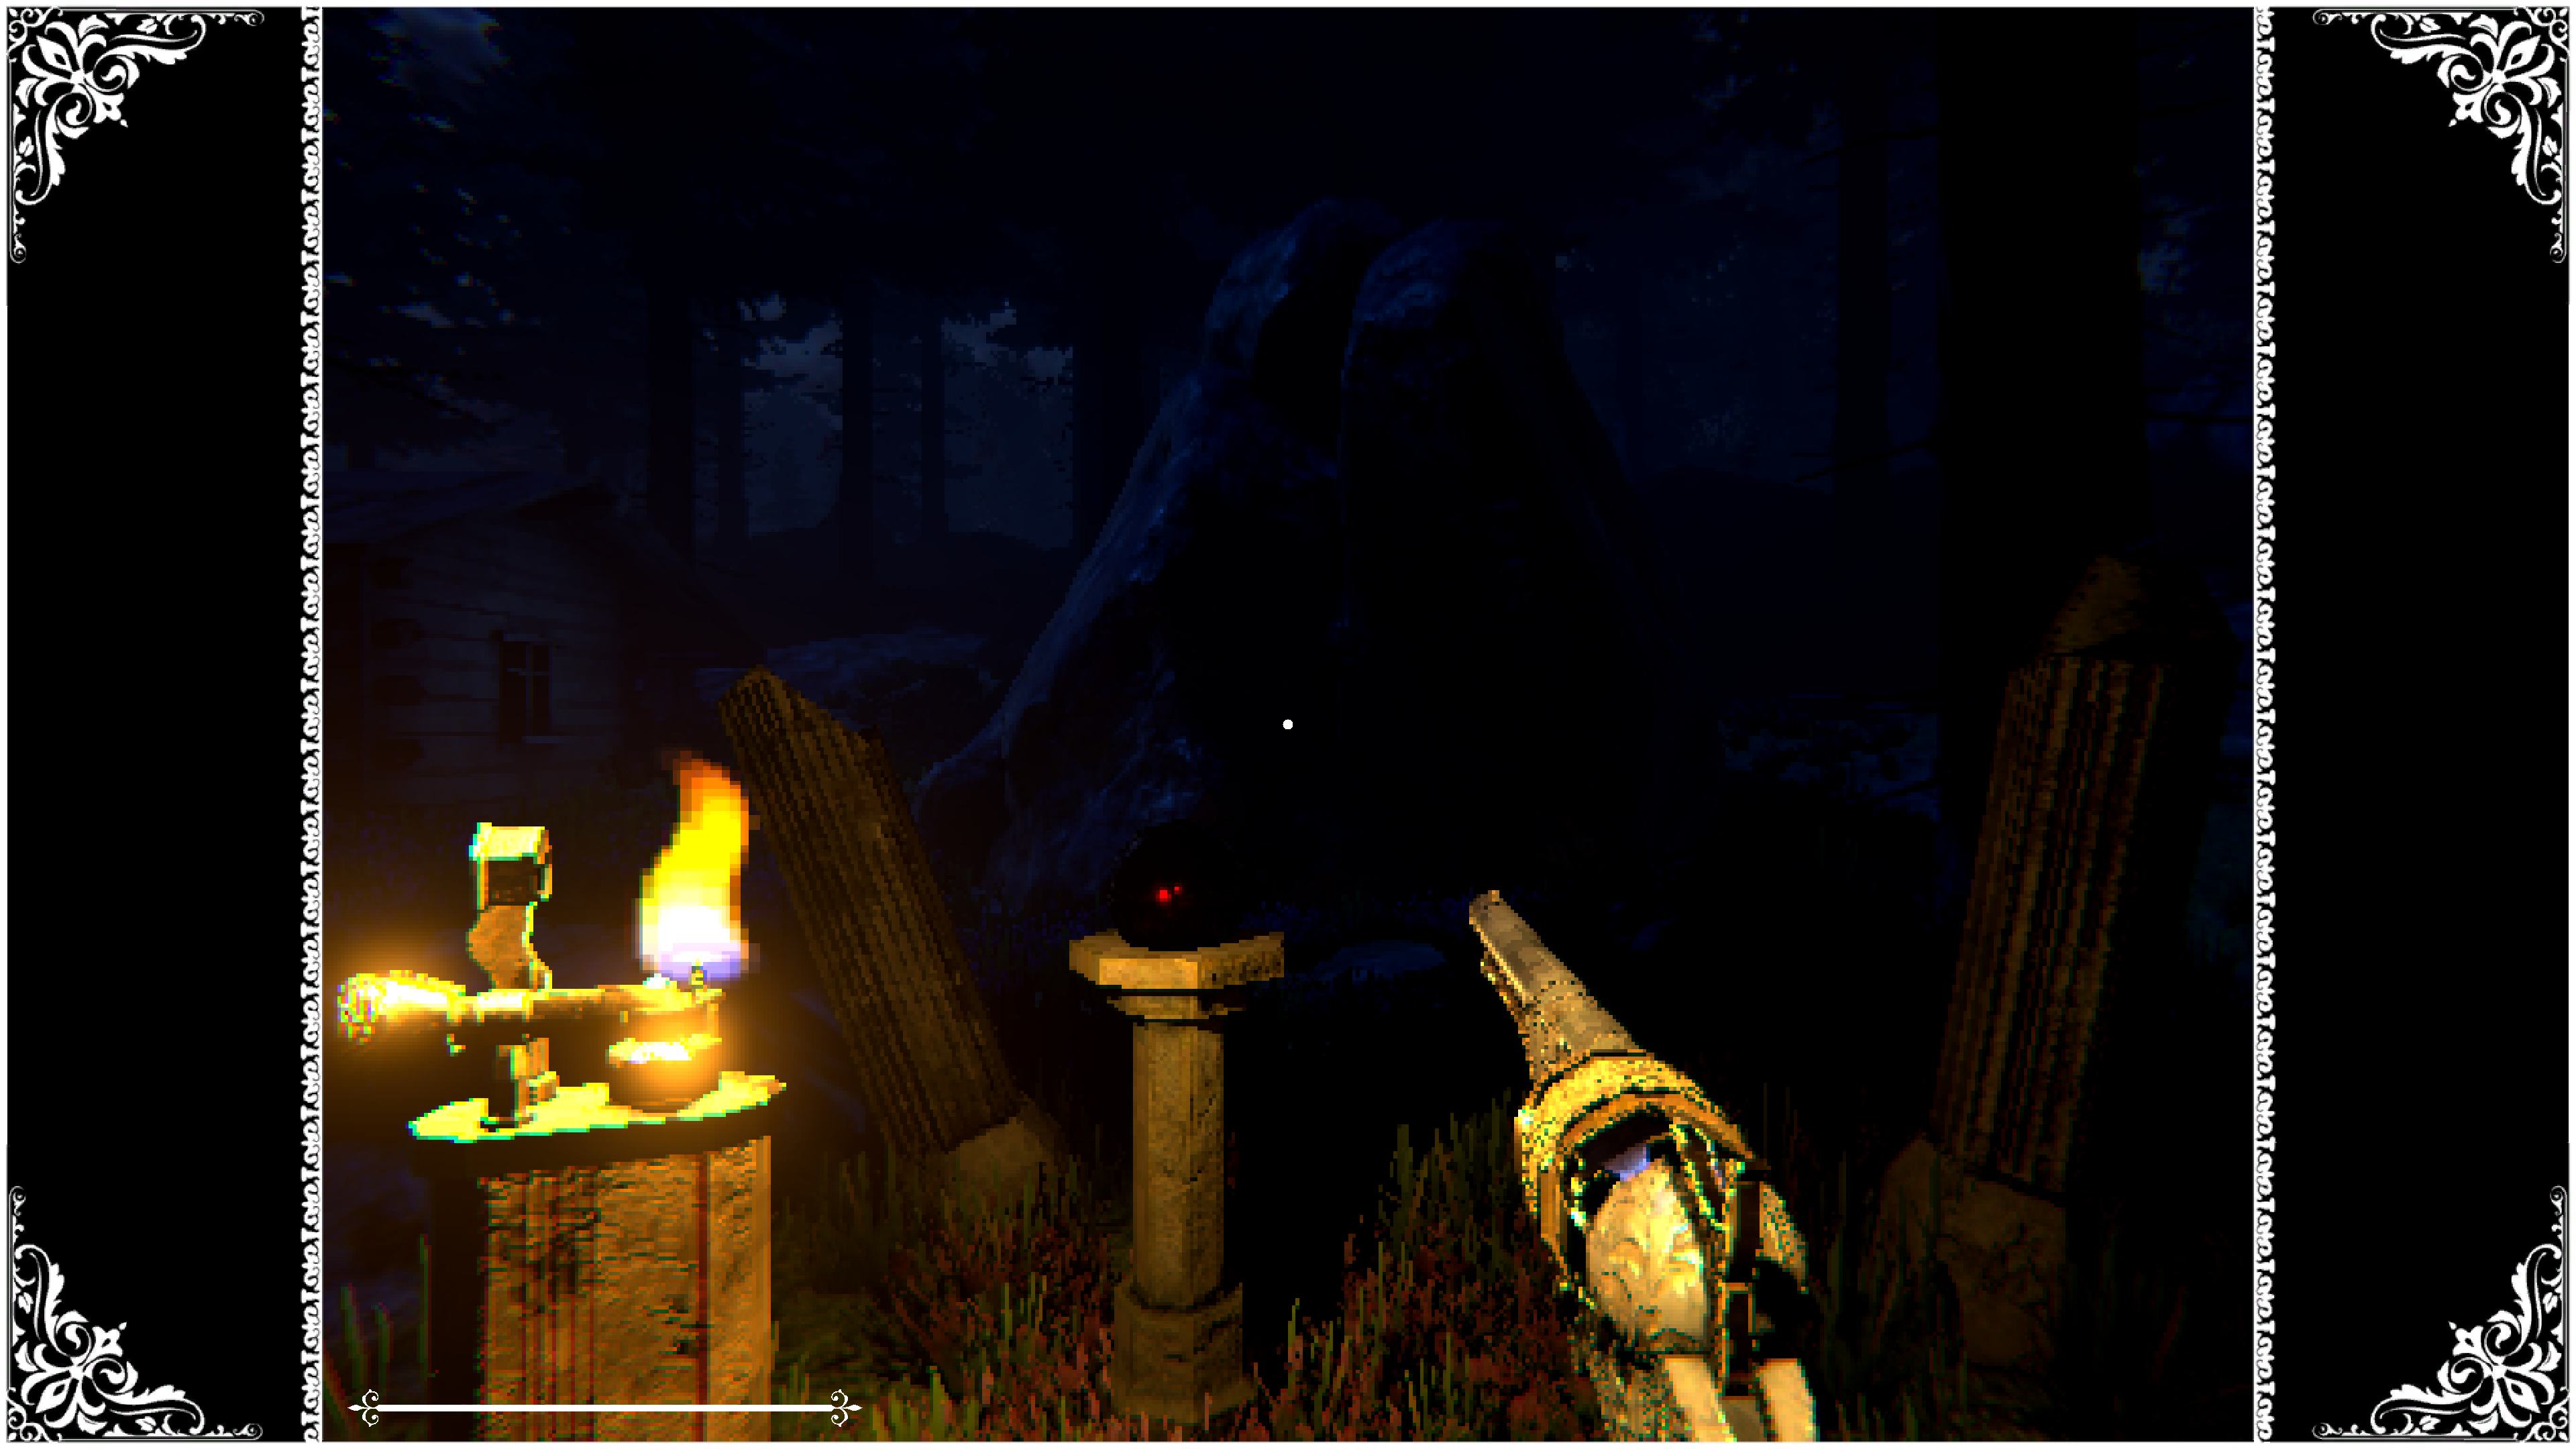 Catafalque - Steam Store Screenshot F